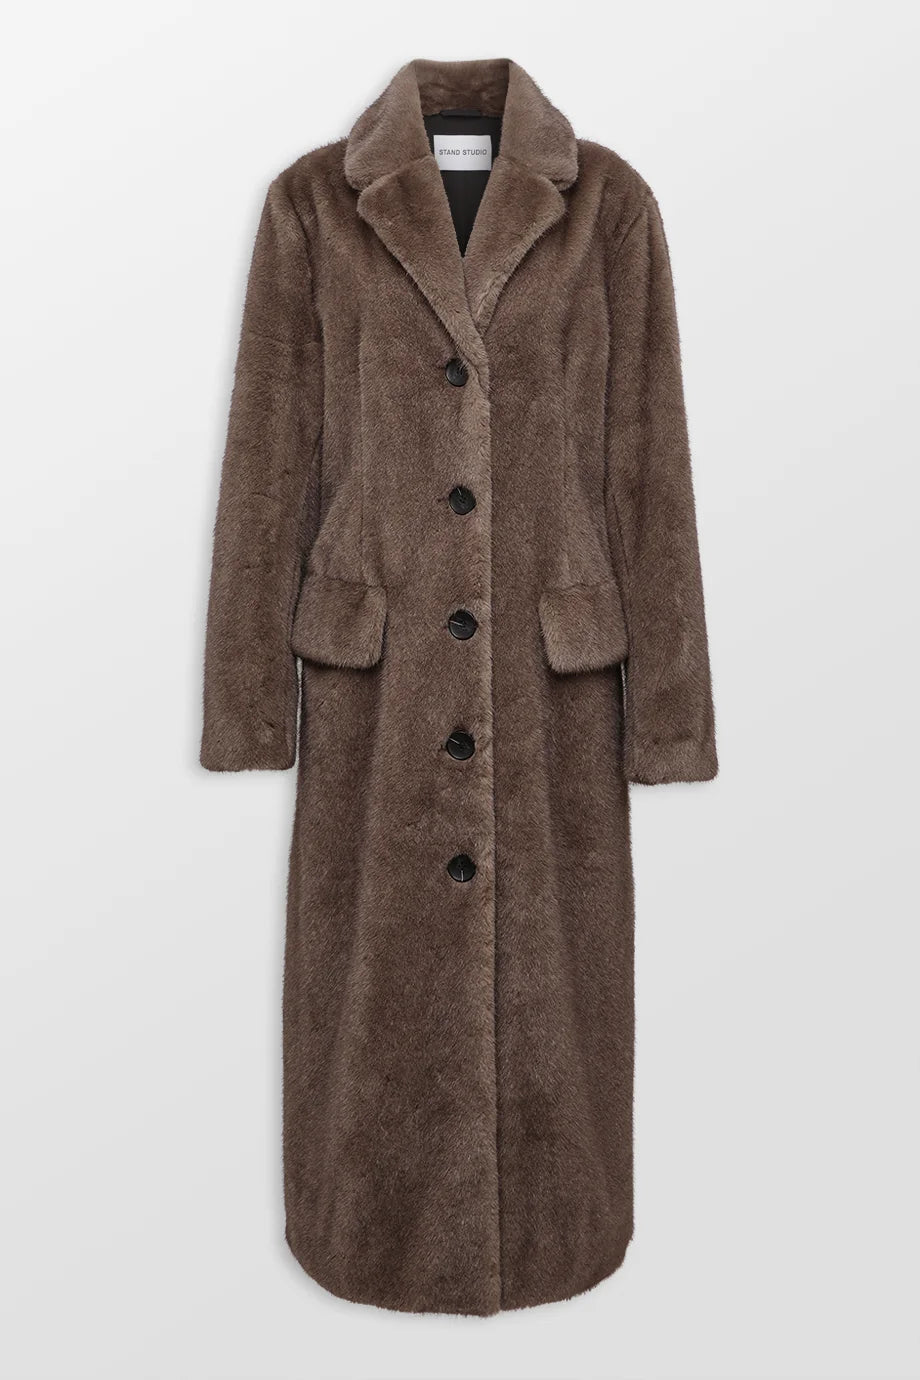 Odette Faux Fur Coat